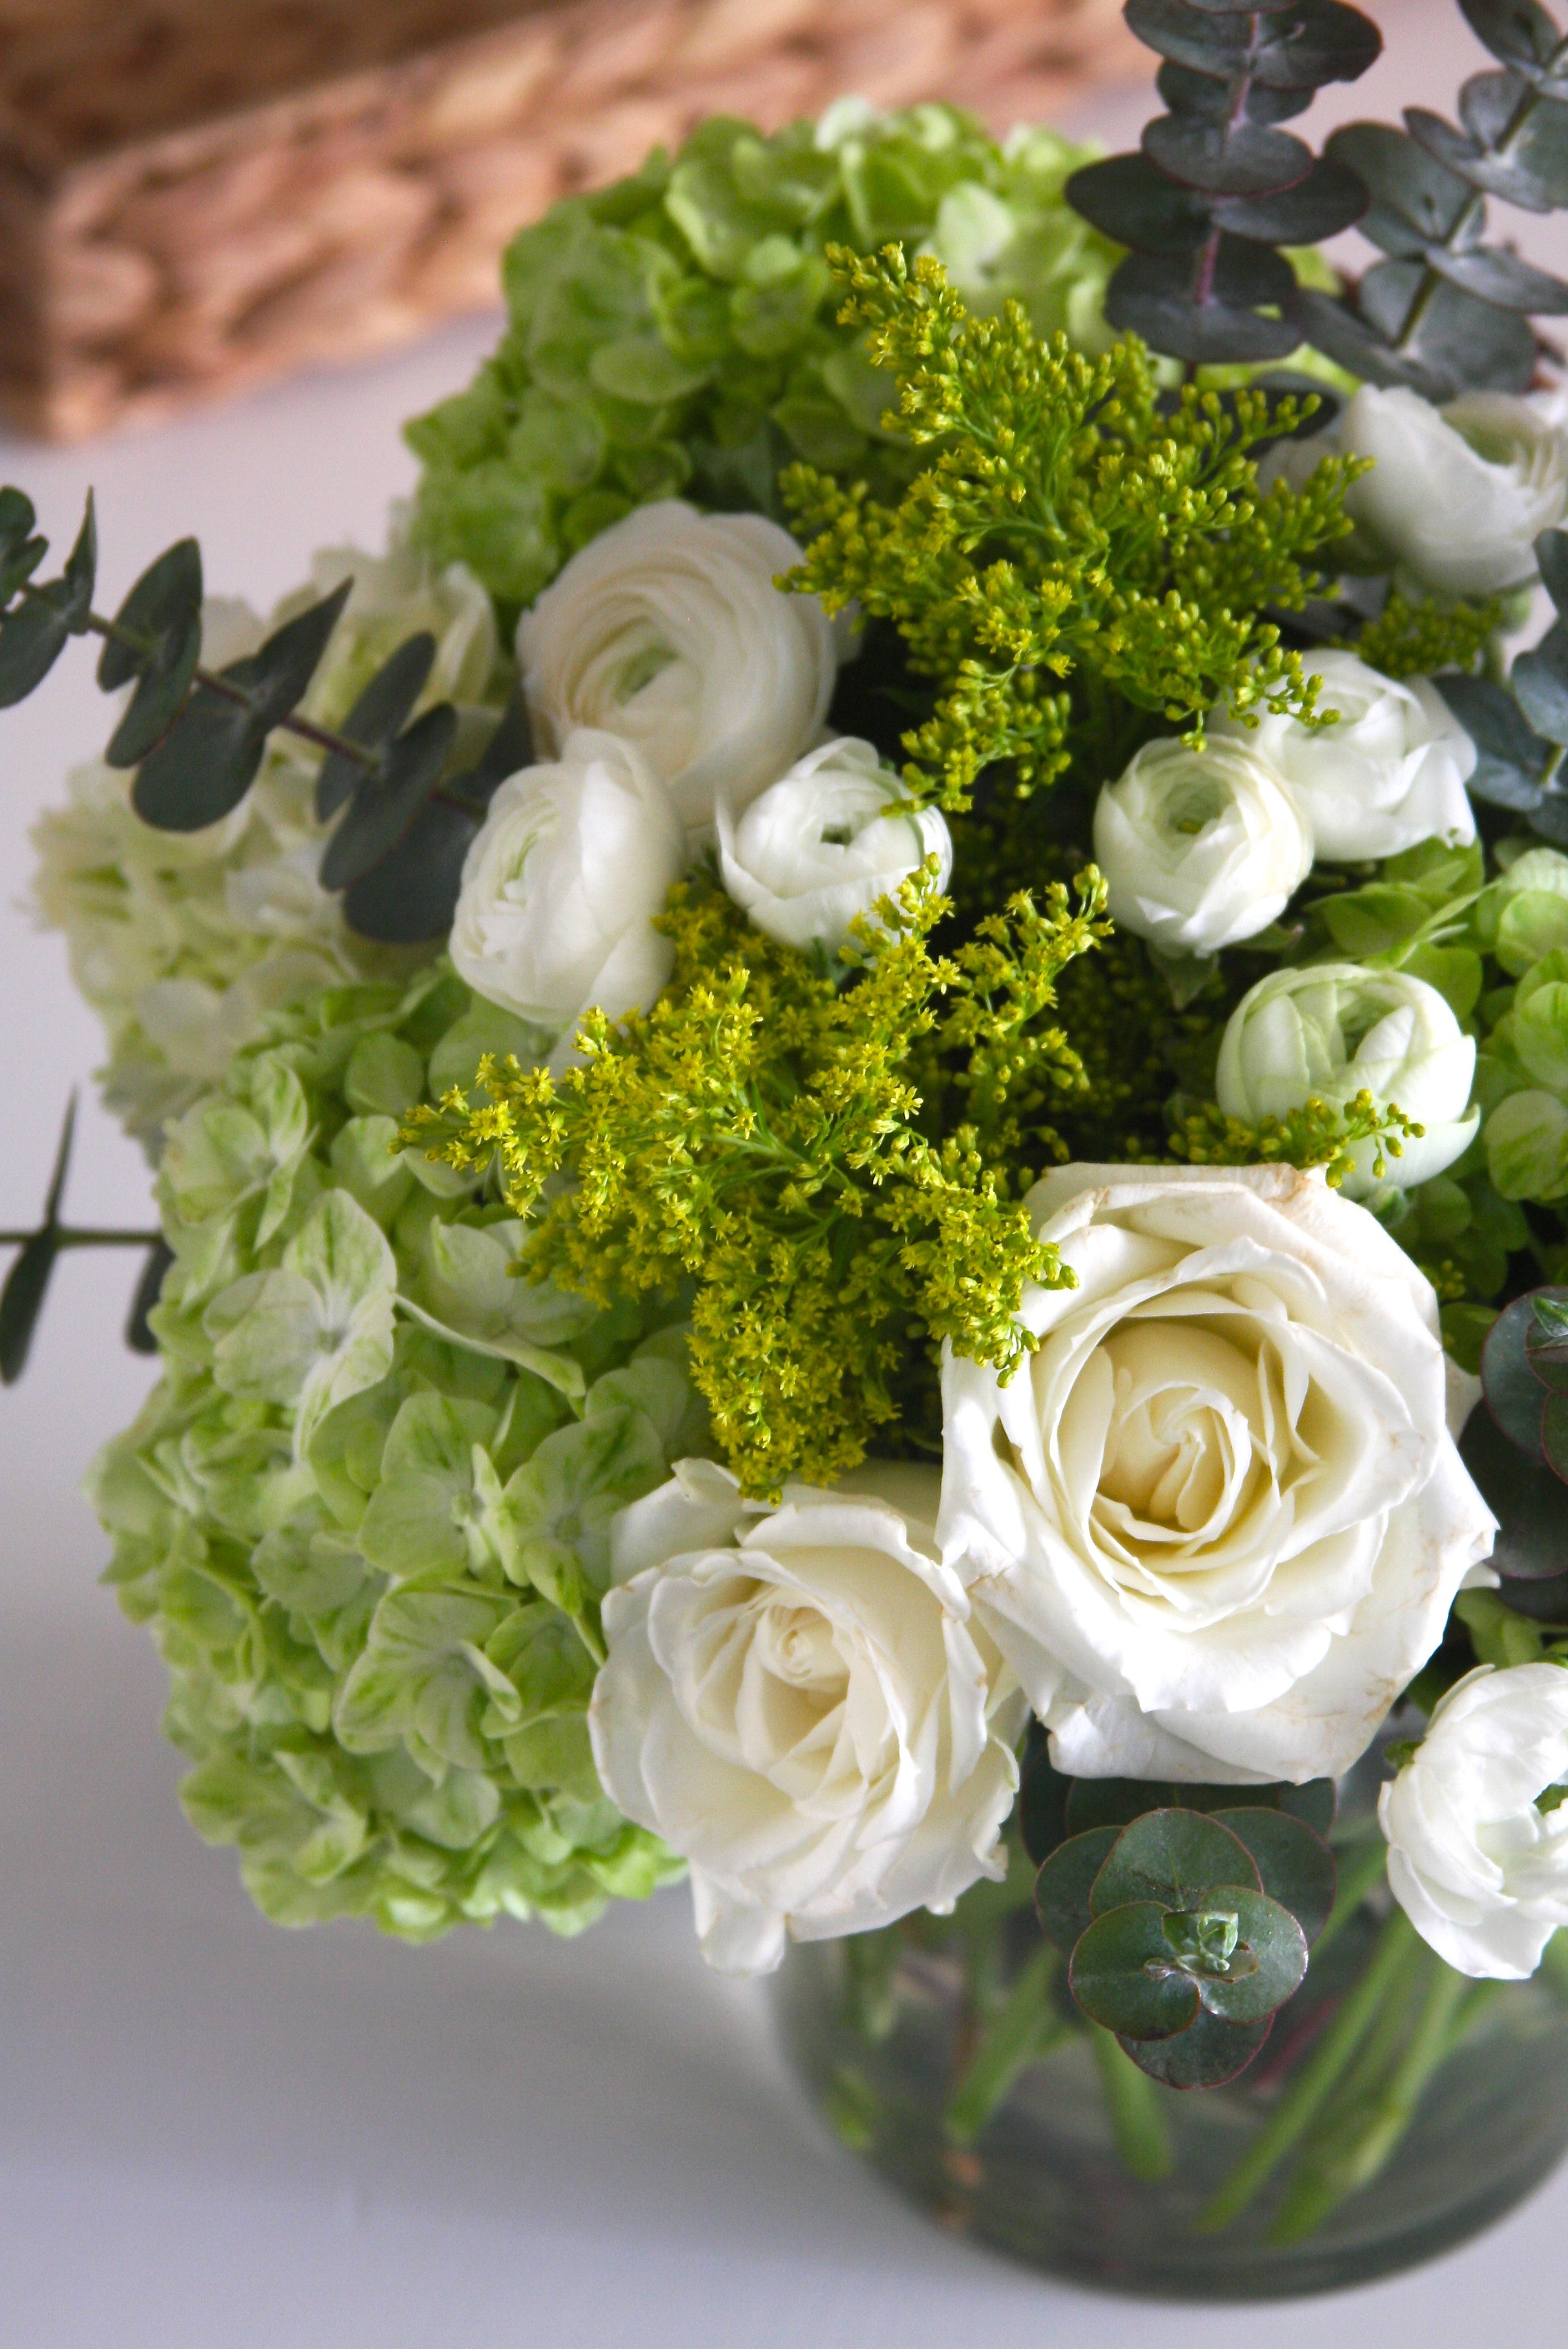 Best ideas about Flower Arrangements DIY
. Save or Pin Elegant DIY Flower Arrangement Now.